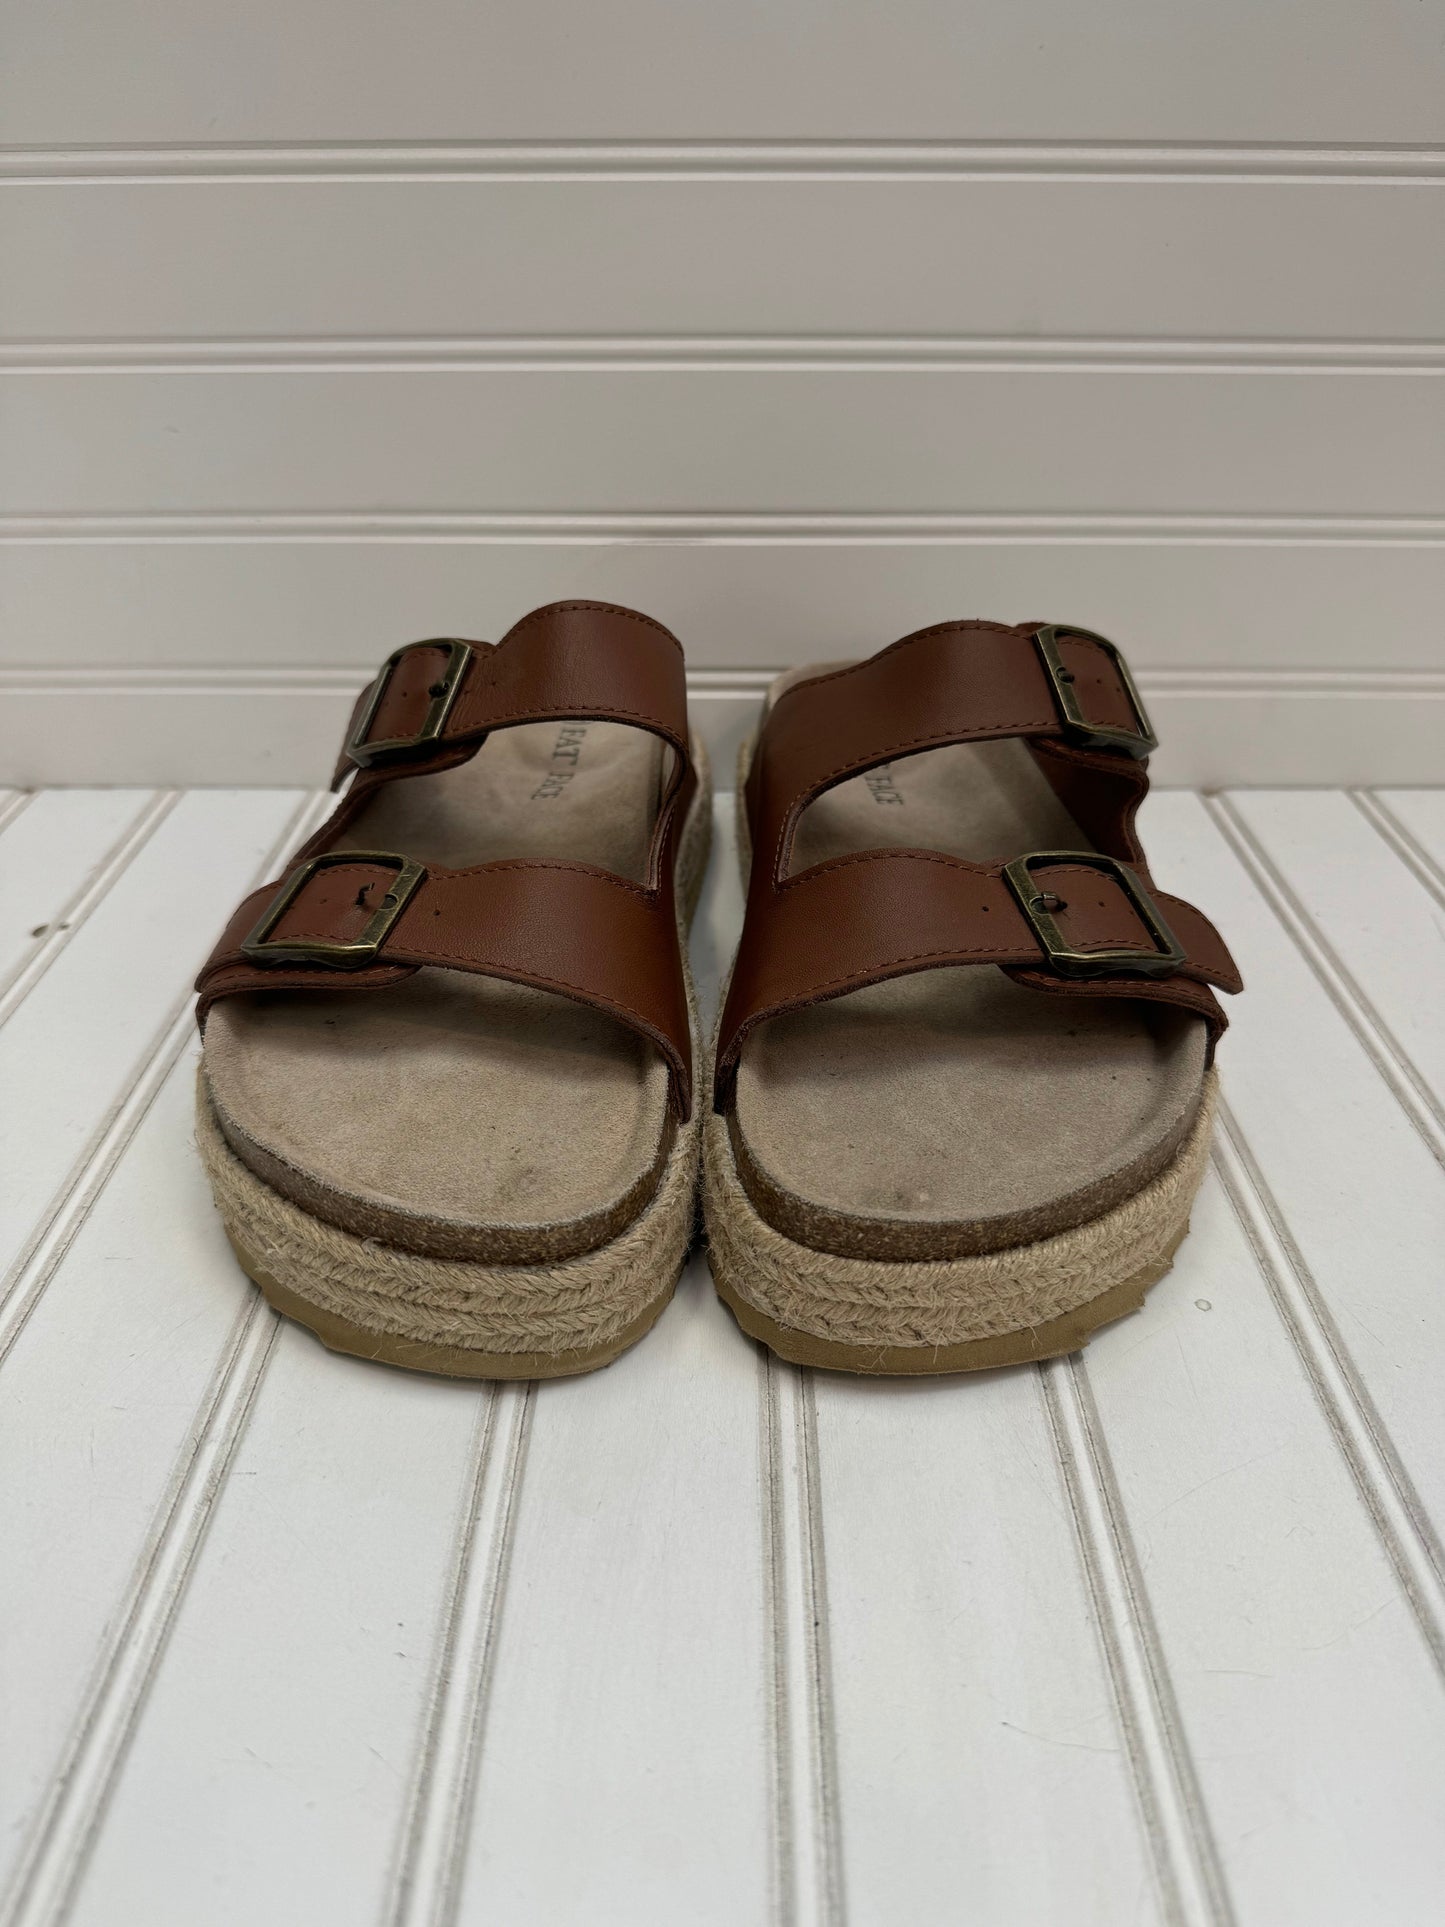 Brown Sandals Heels Platform Fatface, Size 8